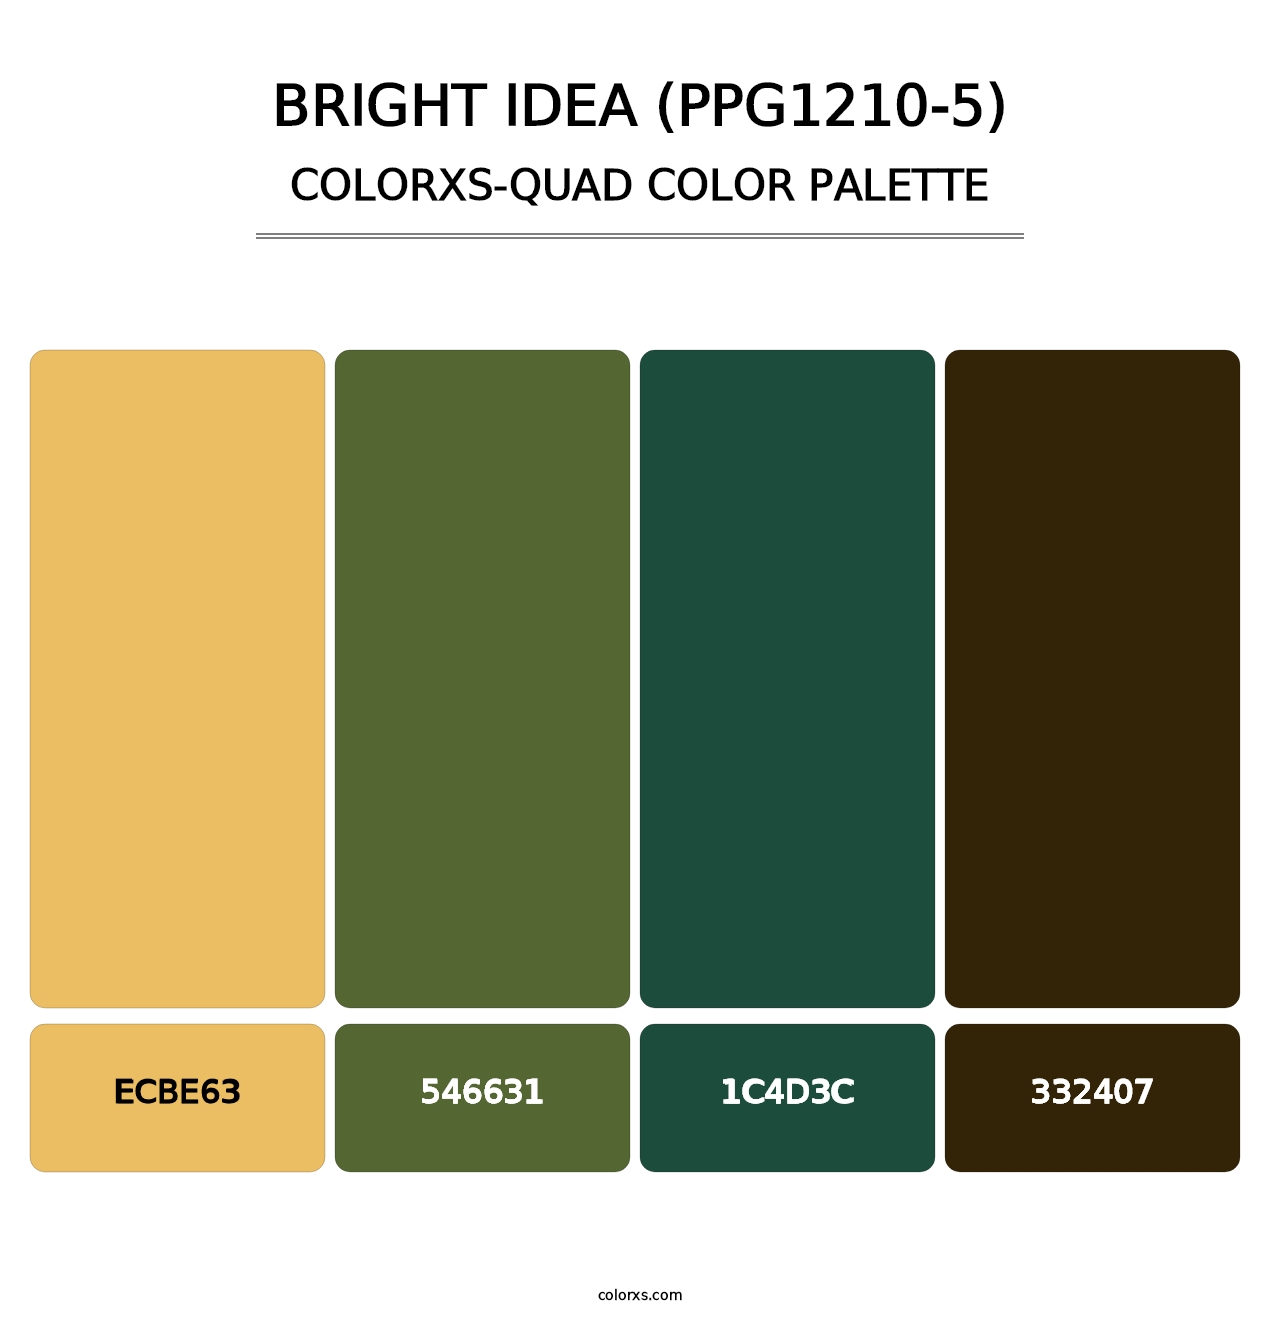 Bright Idea (PPG1210-5) - Colorxs Quad Palette